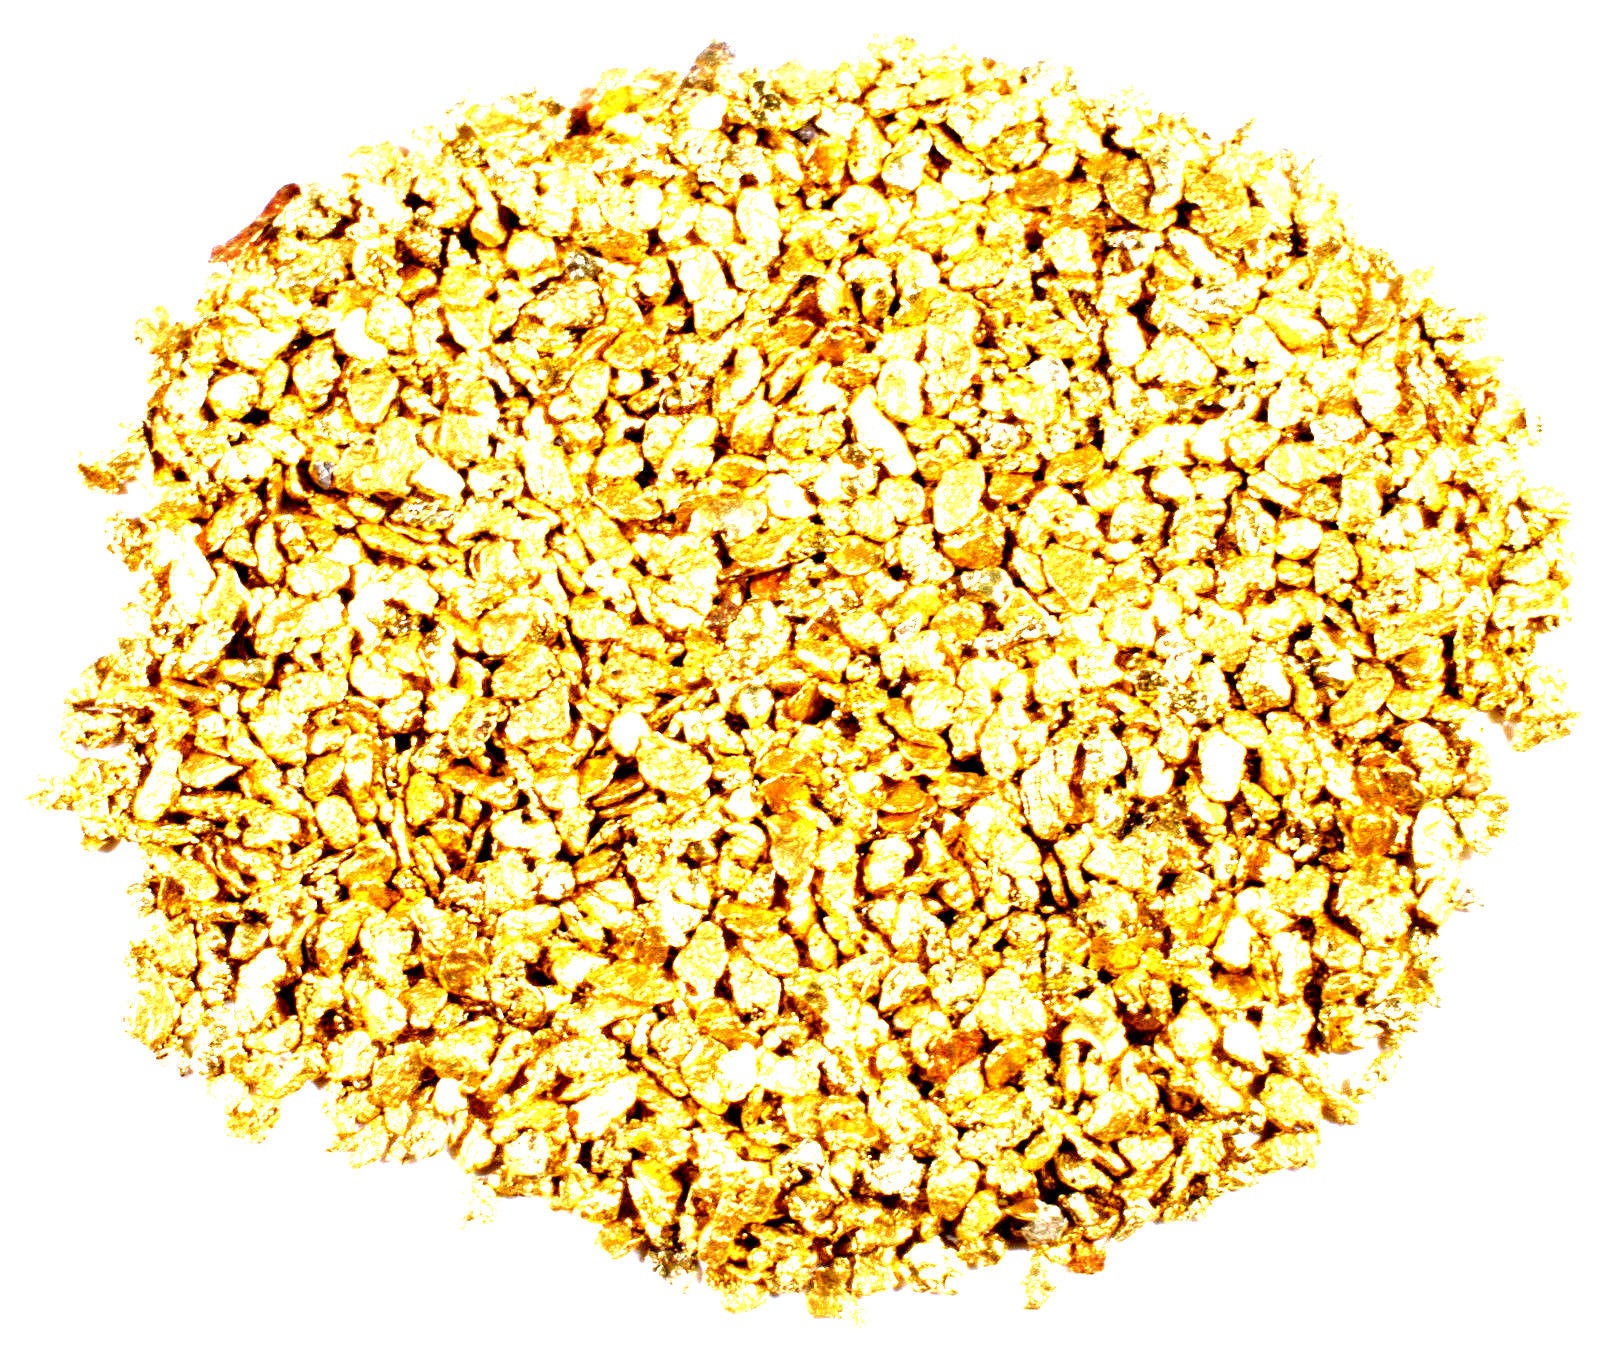 10 UTAH GOLDBACK AURUM 24KT GOLD FOIL NOTE BU + 10 PIECE ALASKAN GOLD NUGGETS